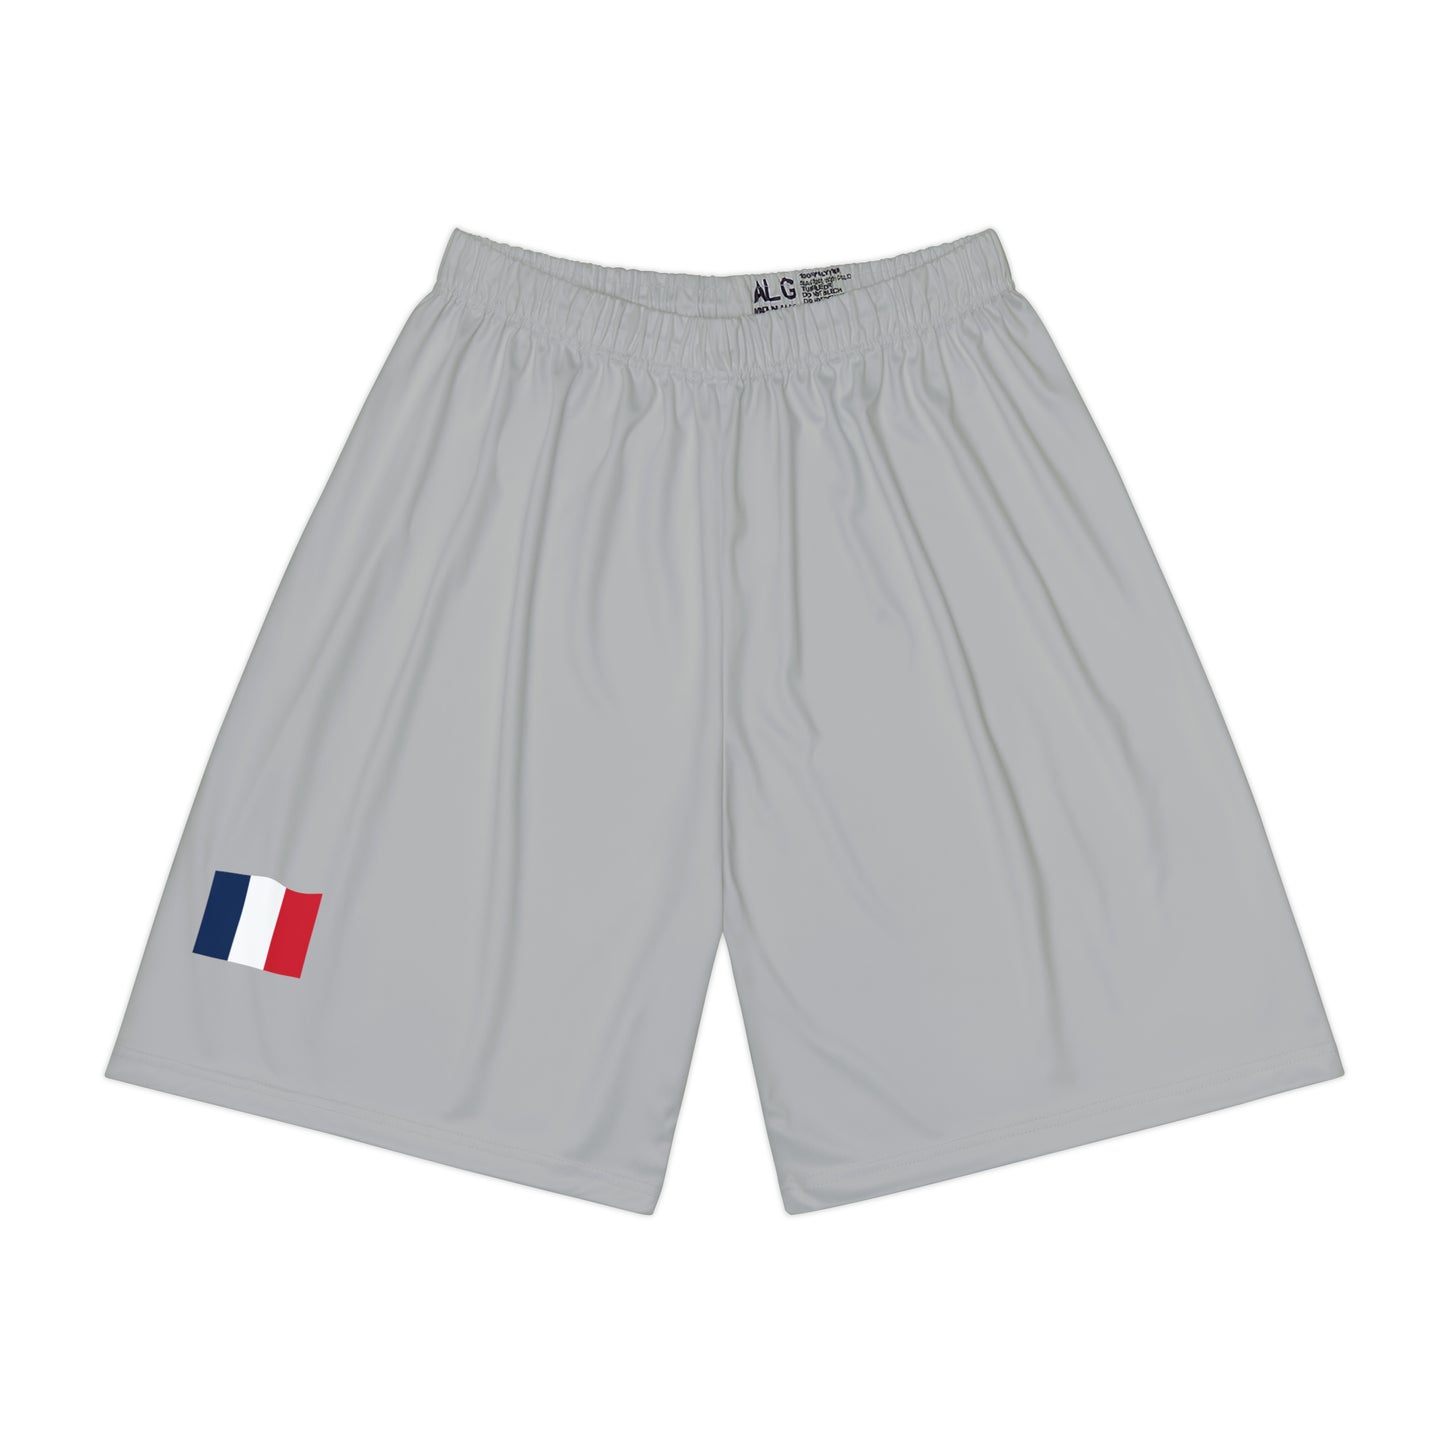 Men’s Sports Shorts, French Flag